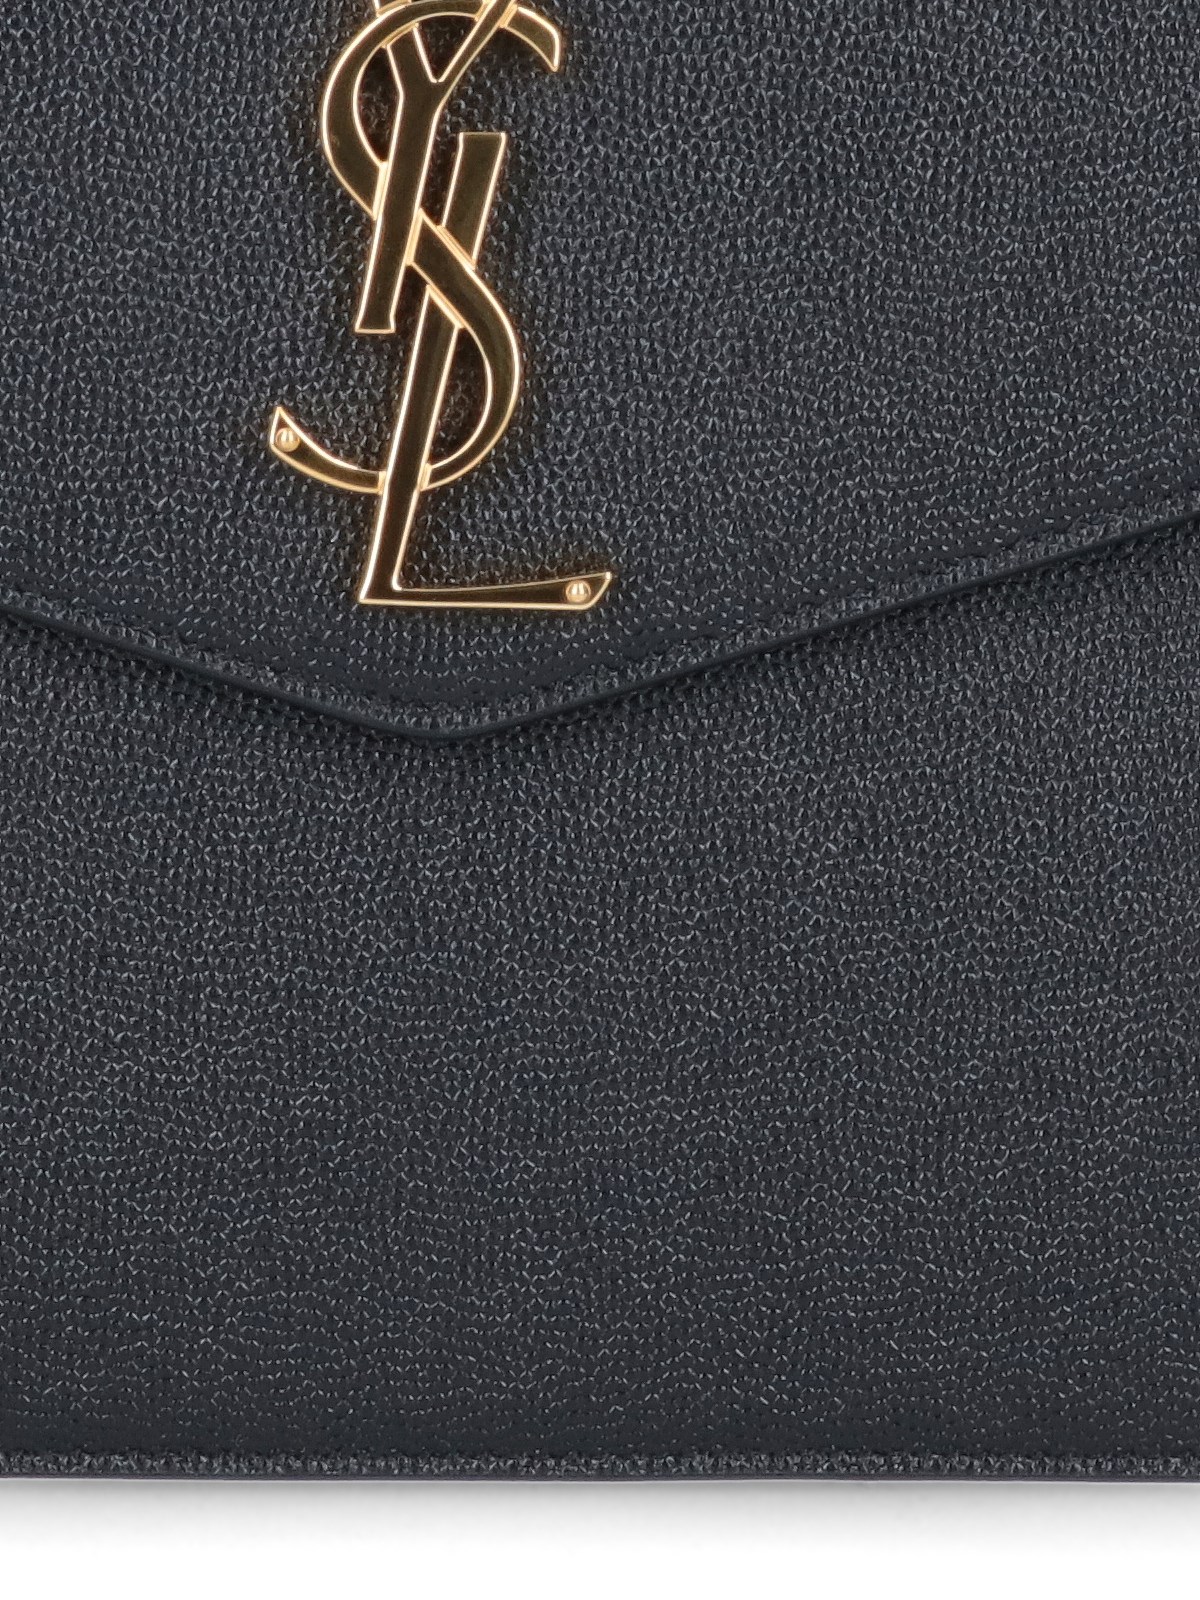 UPTOWN pouch in grain de poudre embossed leather, Saint Laurent